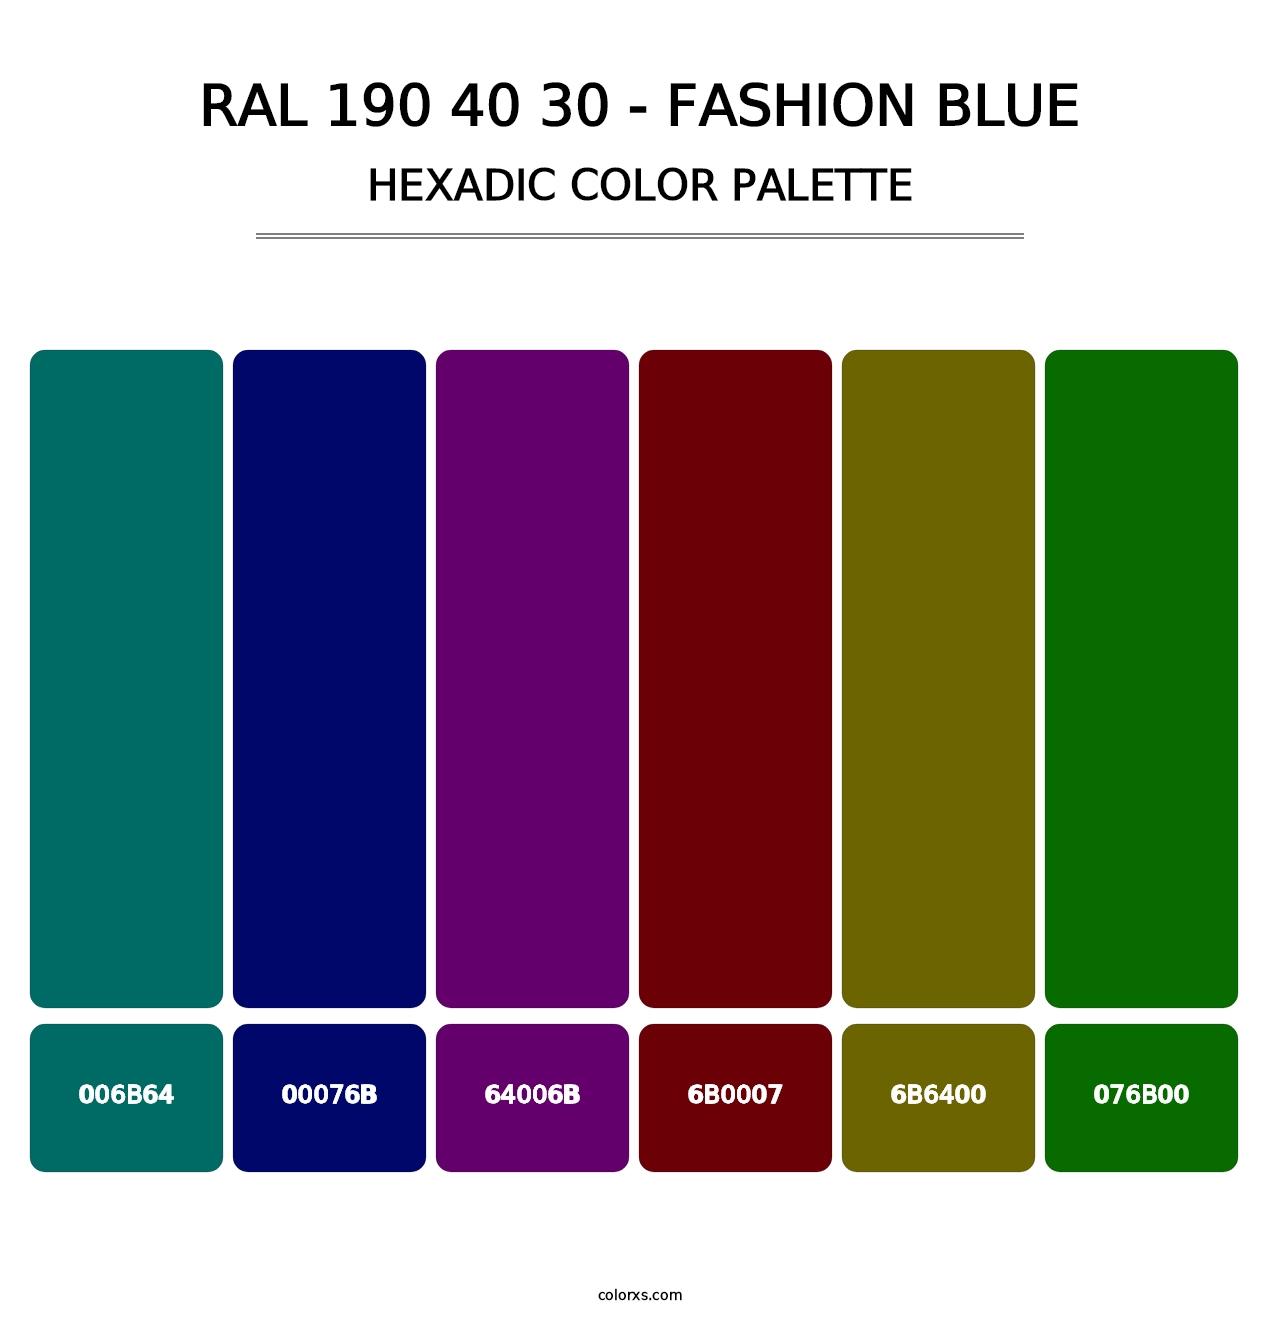 RAL 190 40 30 - Fashion Blue - Hexadic Color Palette